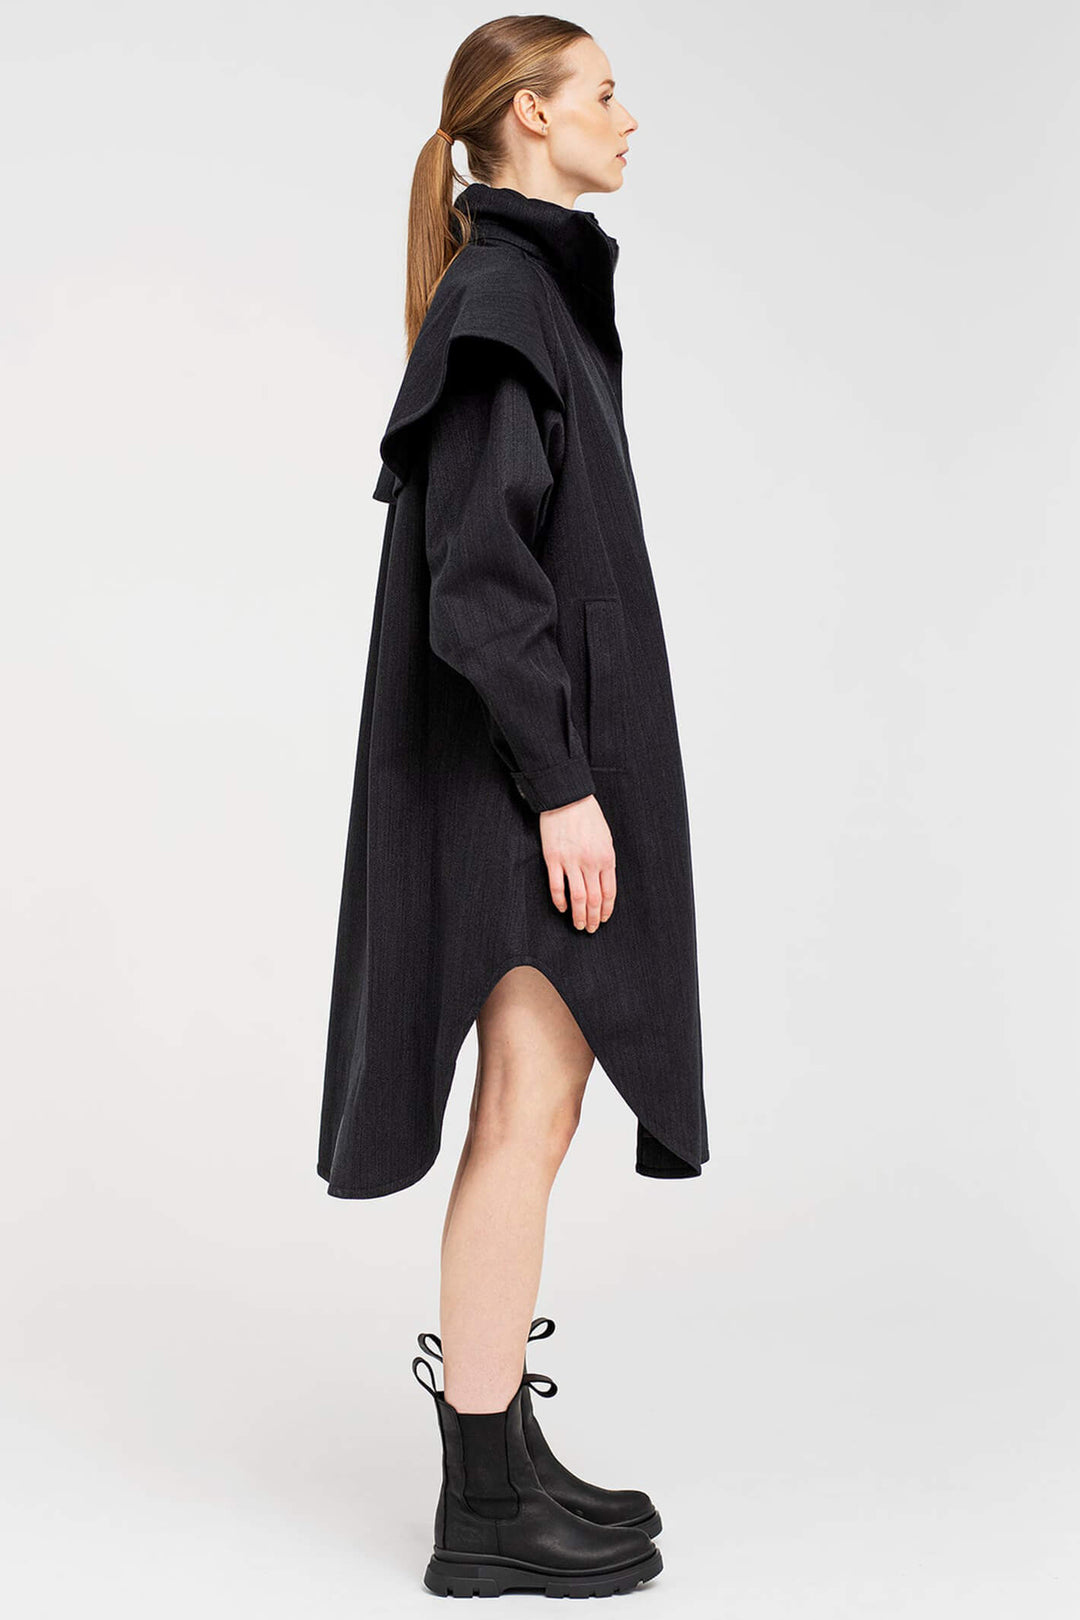 BRGN 15034L2 097 Black Tweed Tyfon Waterproof Raincoat - Olivia Grace Fashion